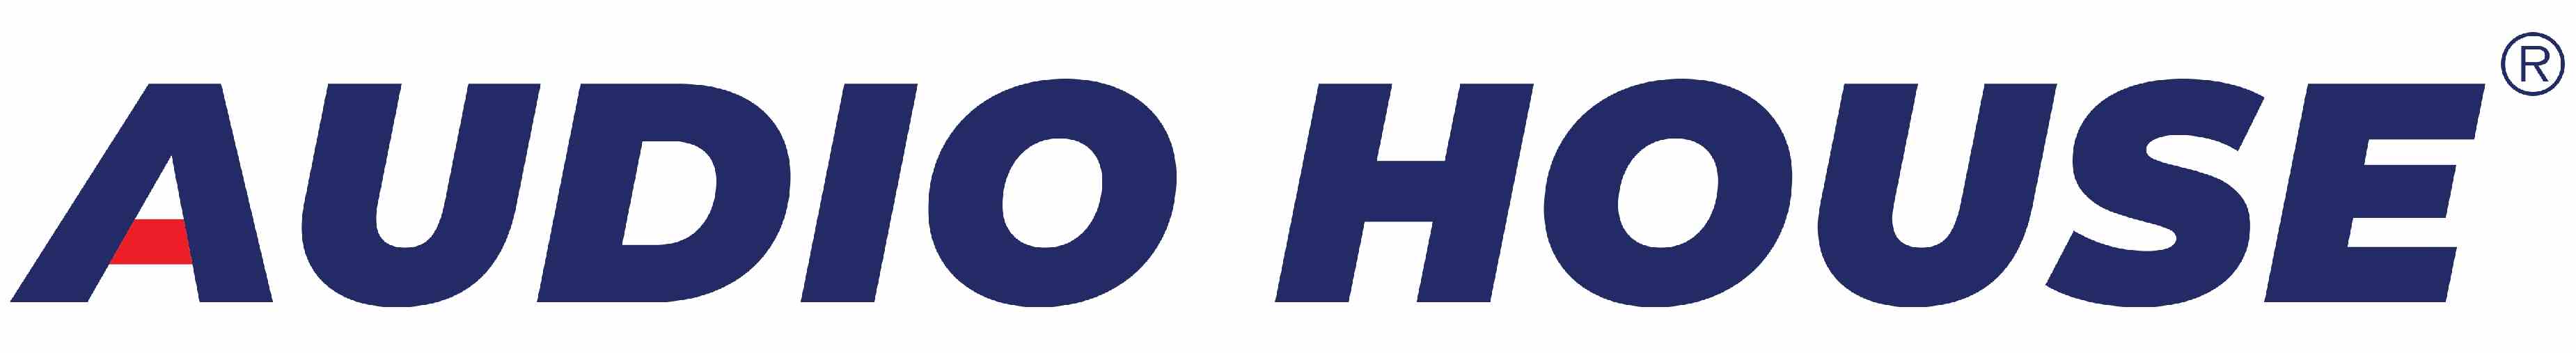 Audio House Marketing Pte Ltd company logo